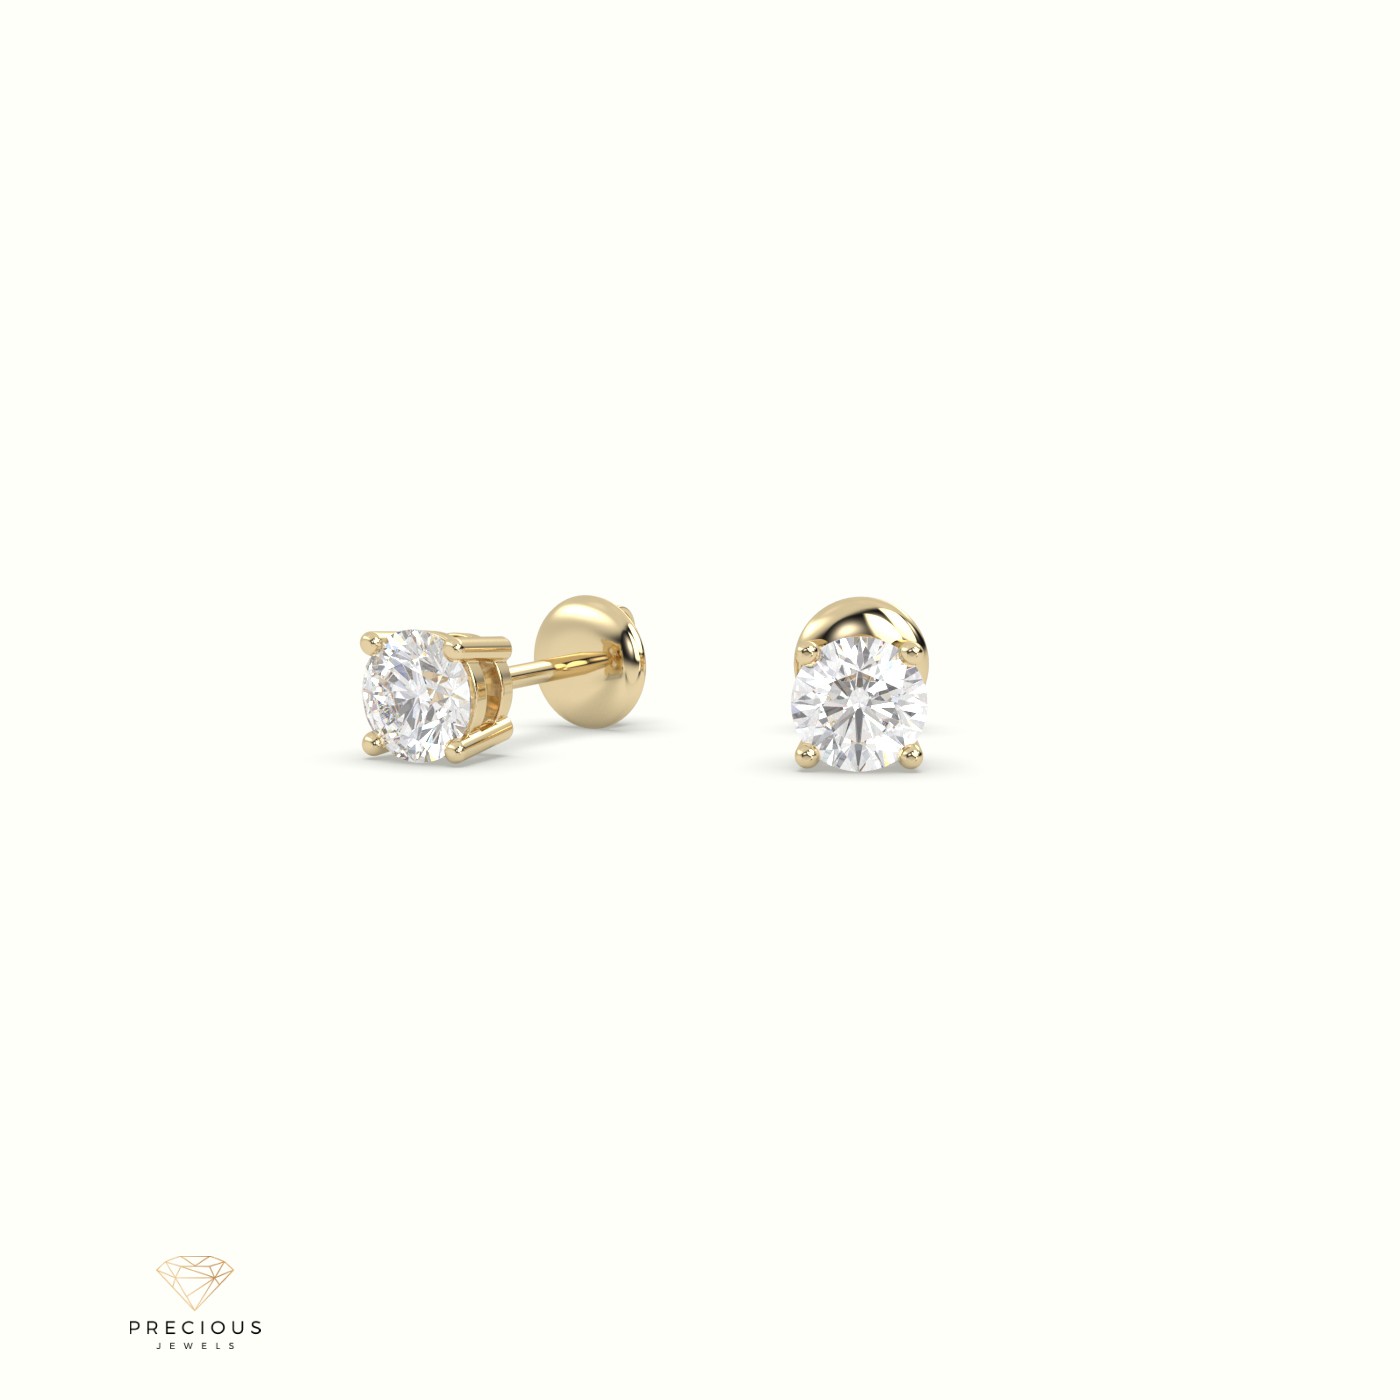 18k yellow gold  4 prongs classic round diamond earring studs